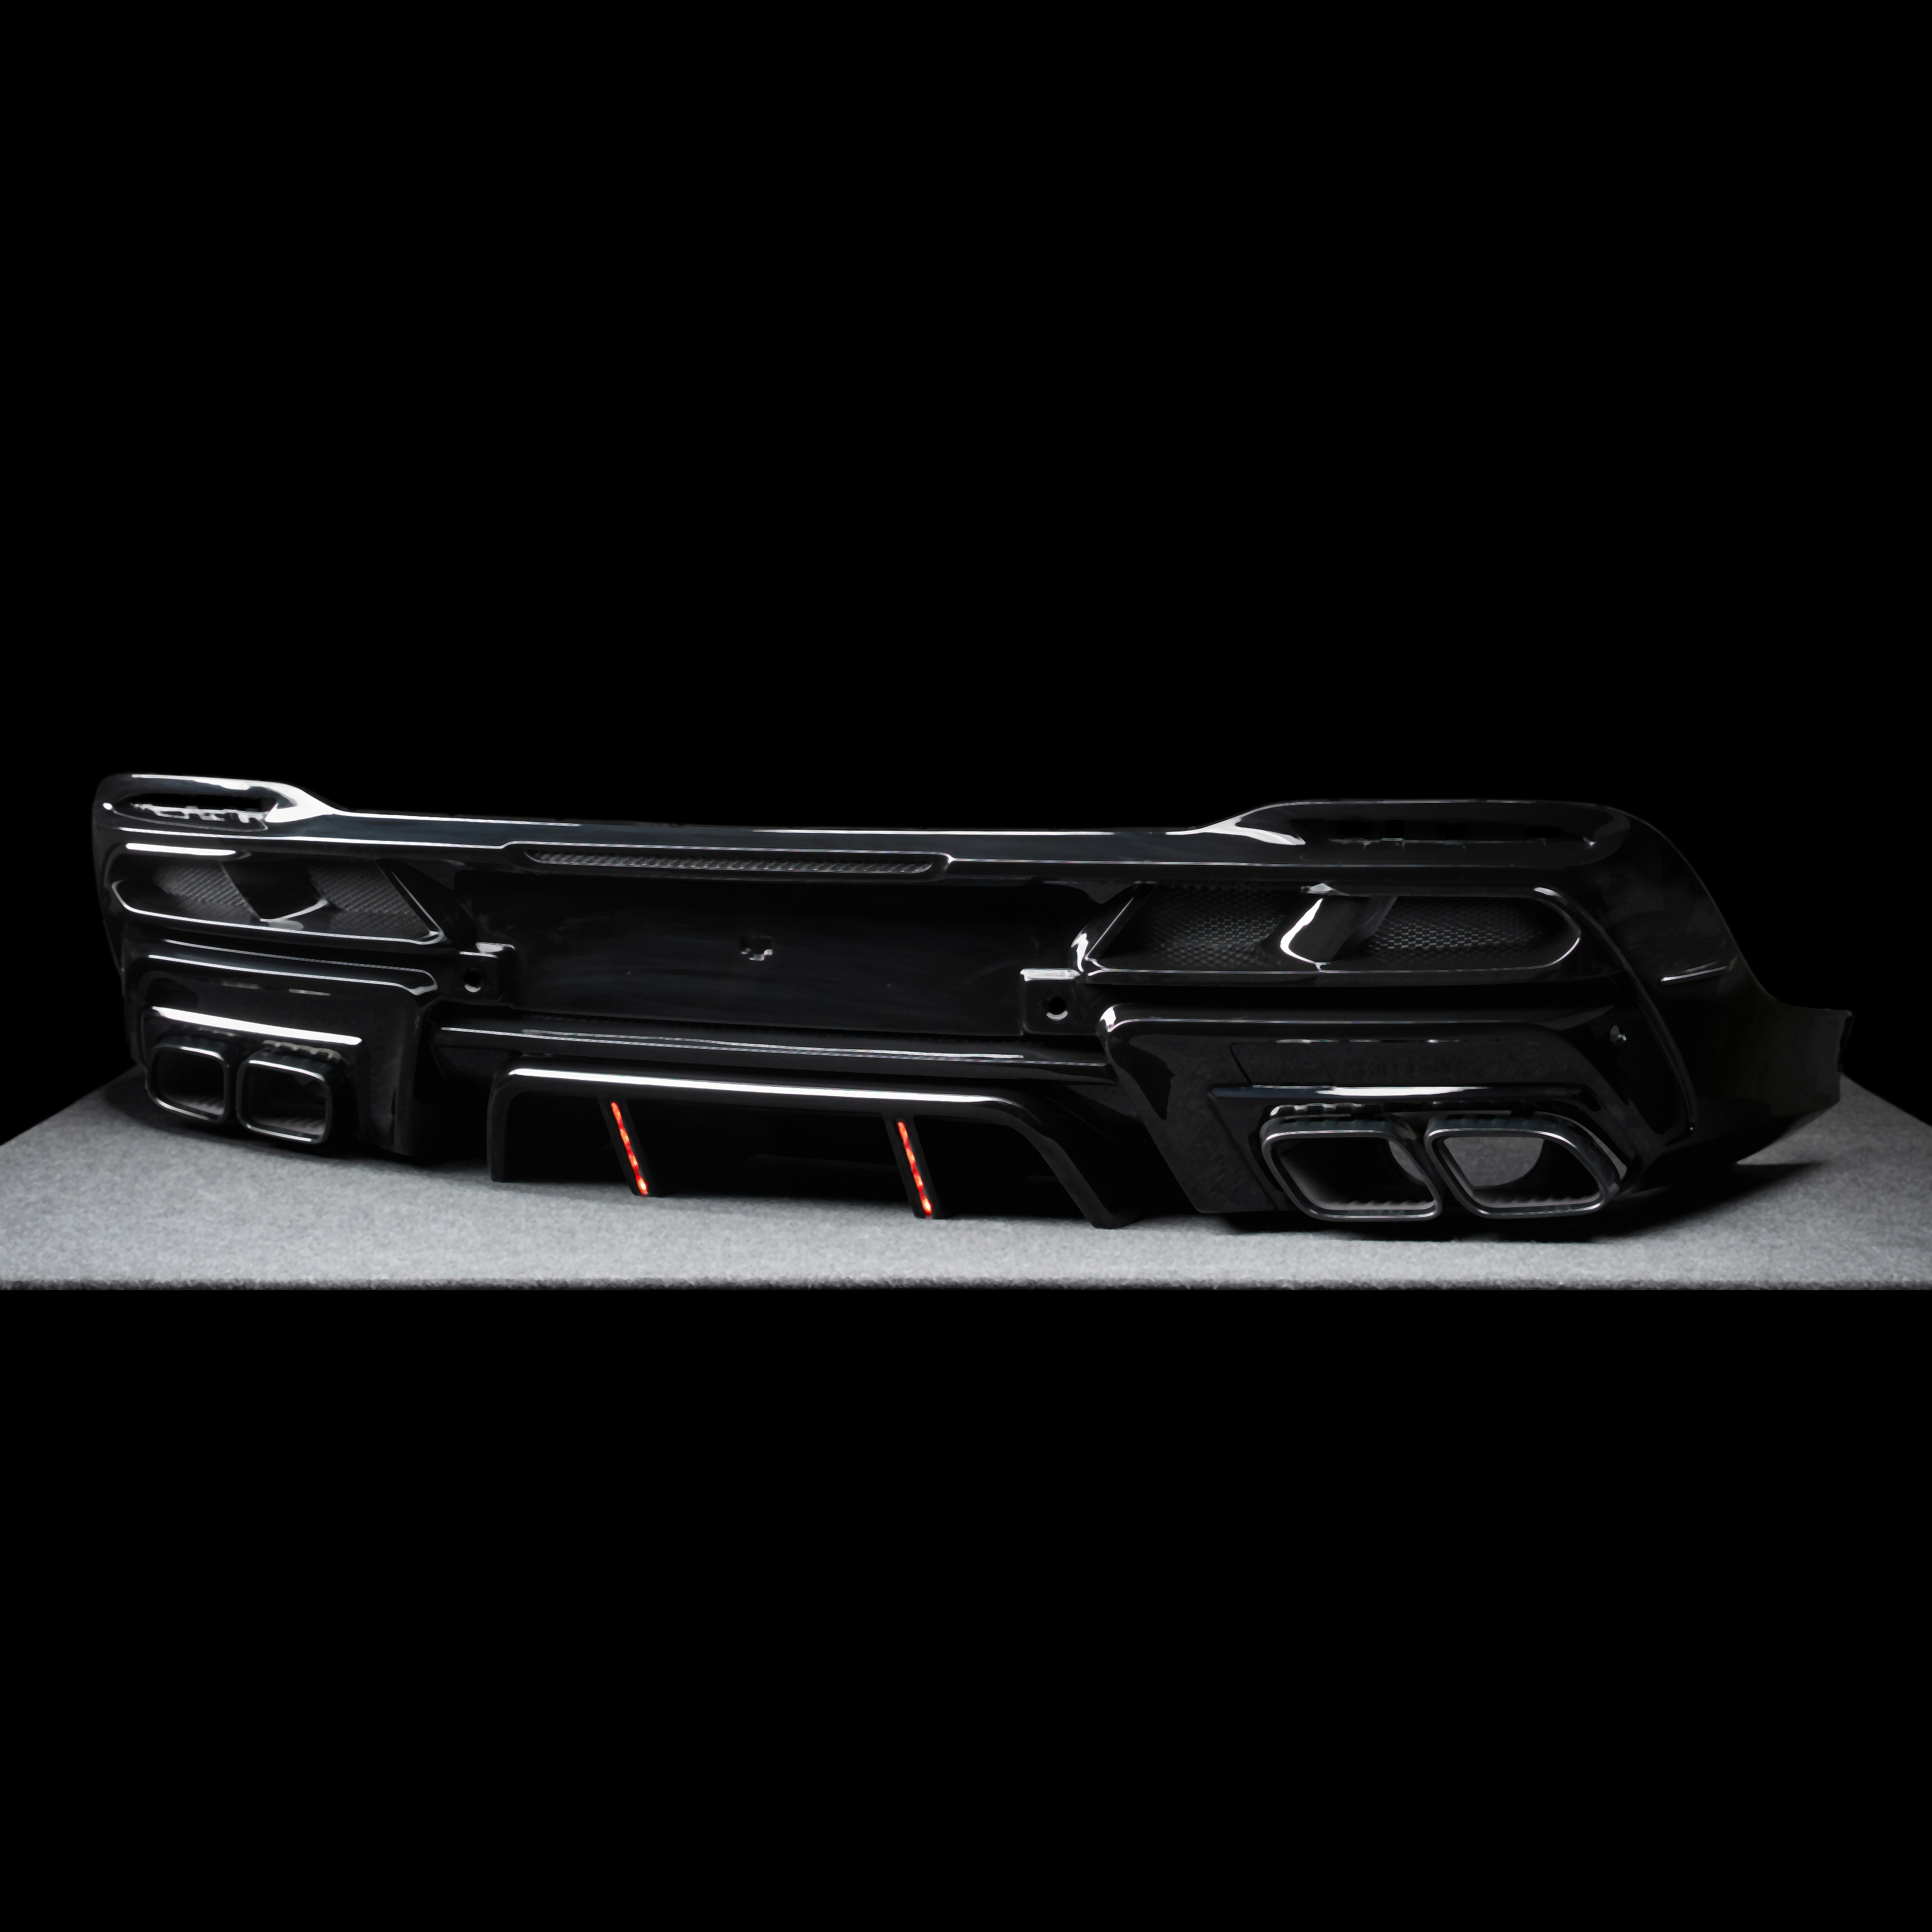 Tuning kits Addon diffuser for Mercedes Benz AMG GLE Coupe 63 S 4MATIC+ C167 M 177 DE 40 AL